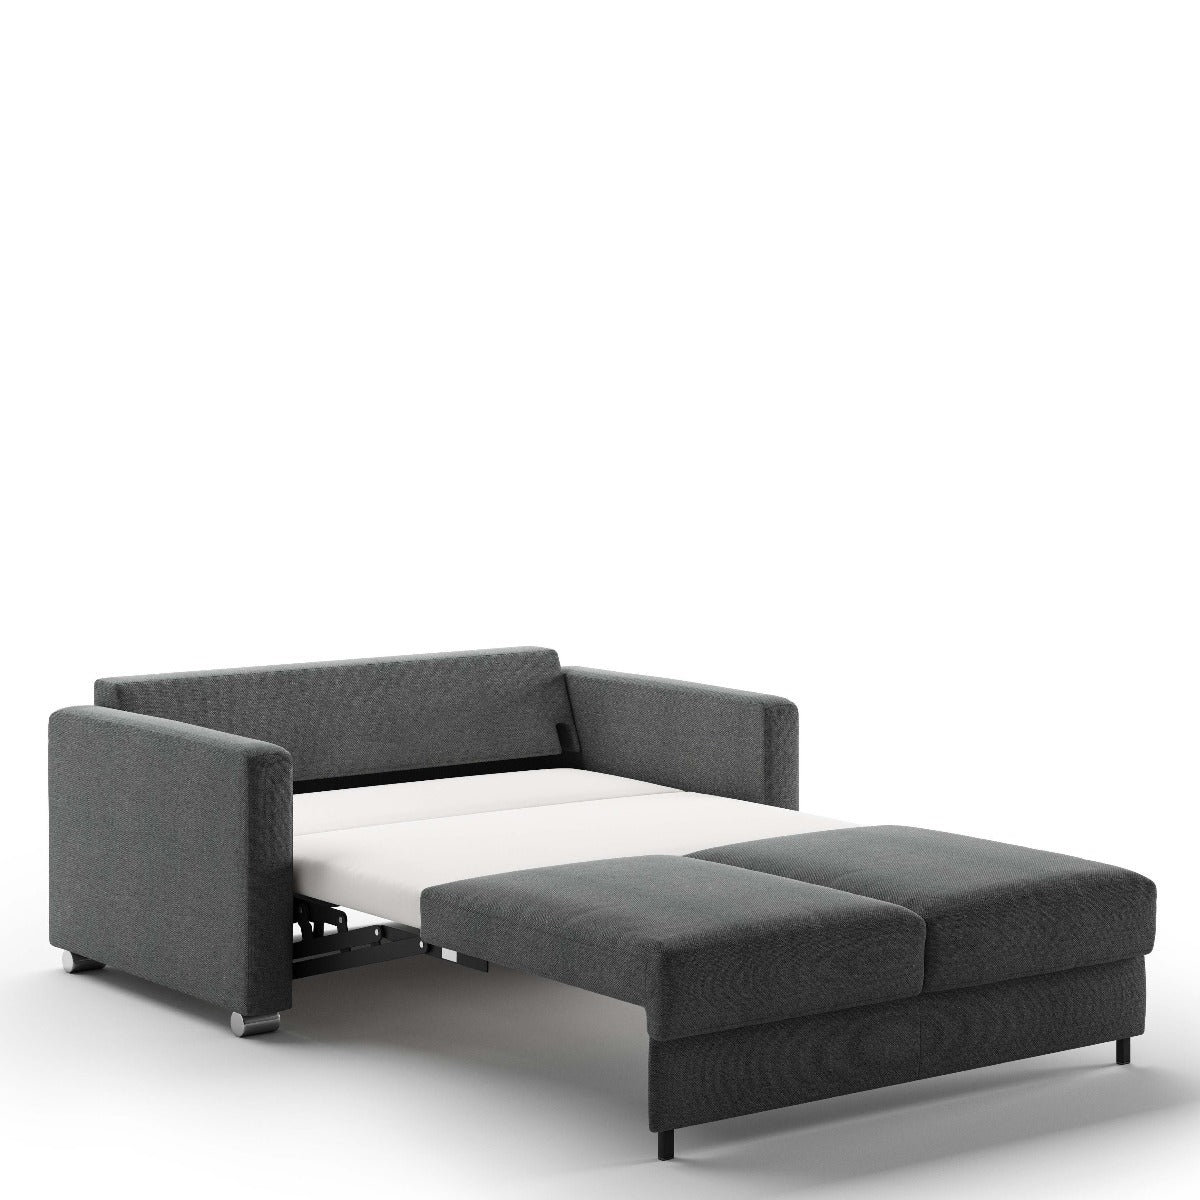 Luonto Furniture Fantasy Full XL Loveseat Sleeper - Fun 481 - 217/6 Chrome